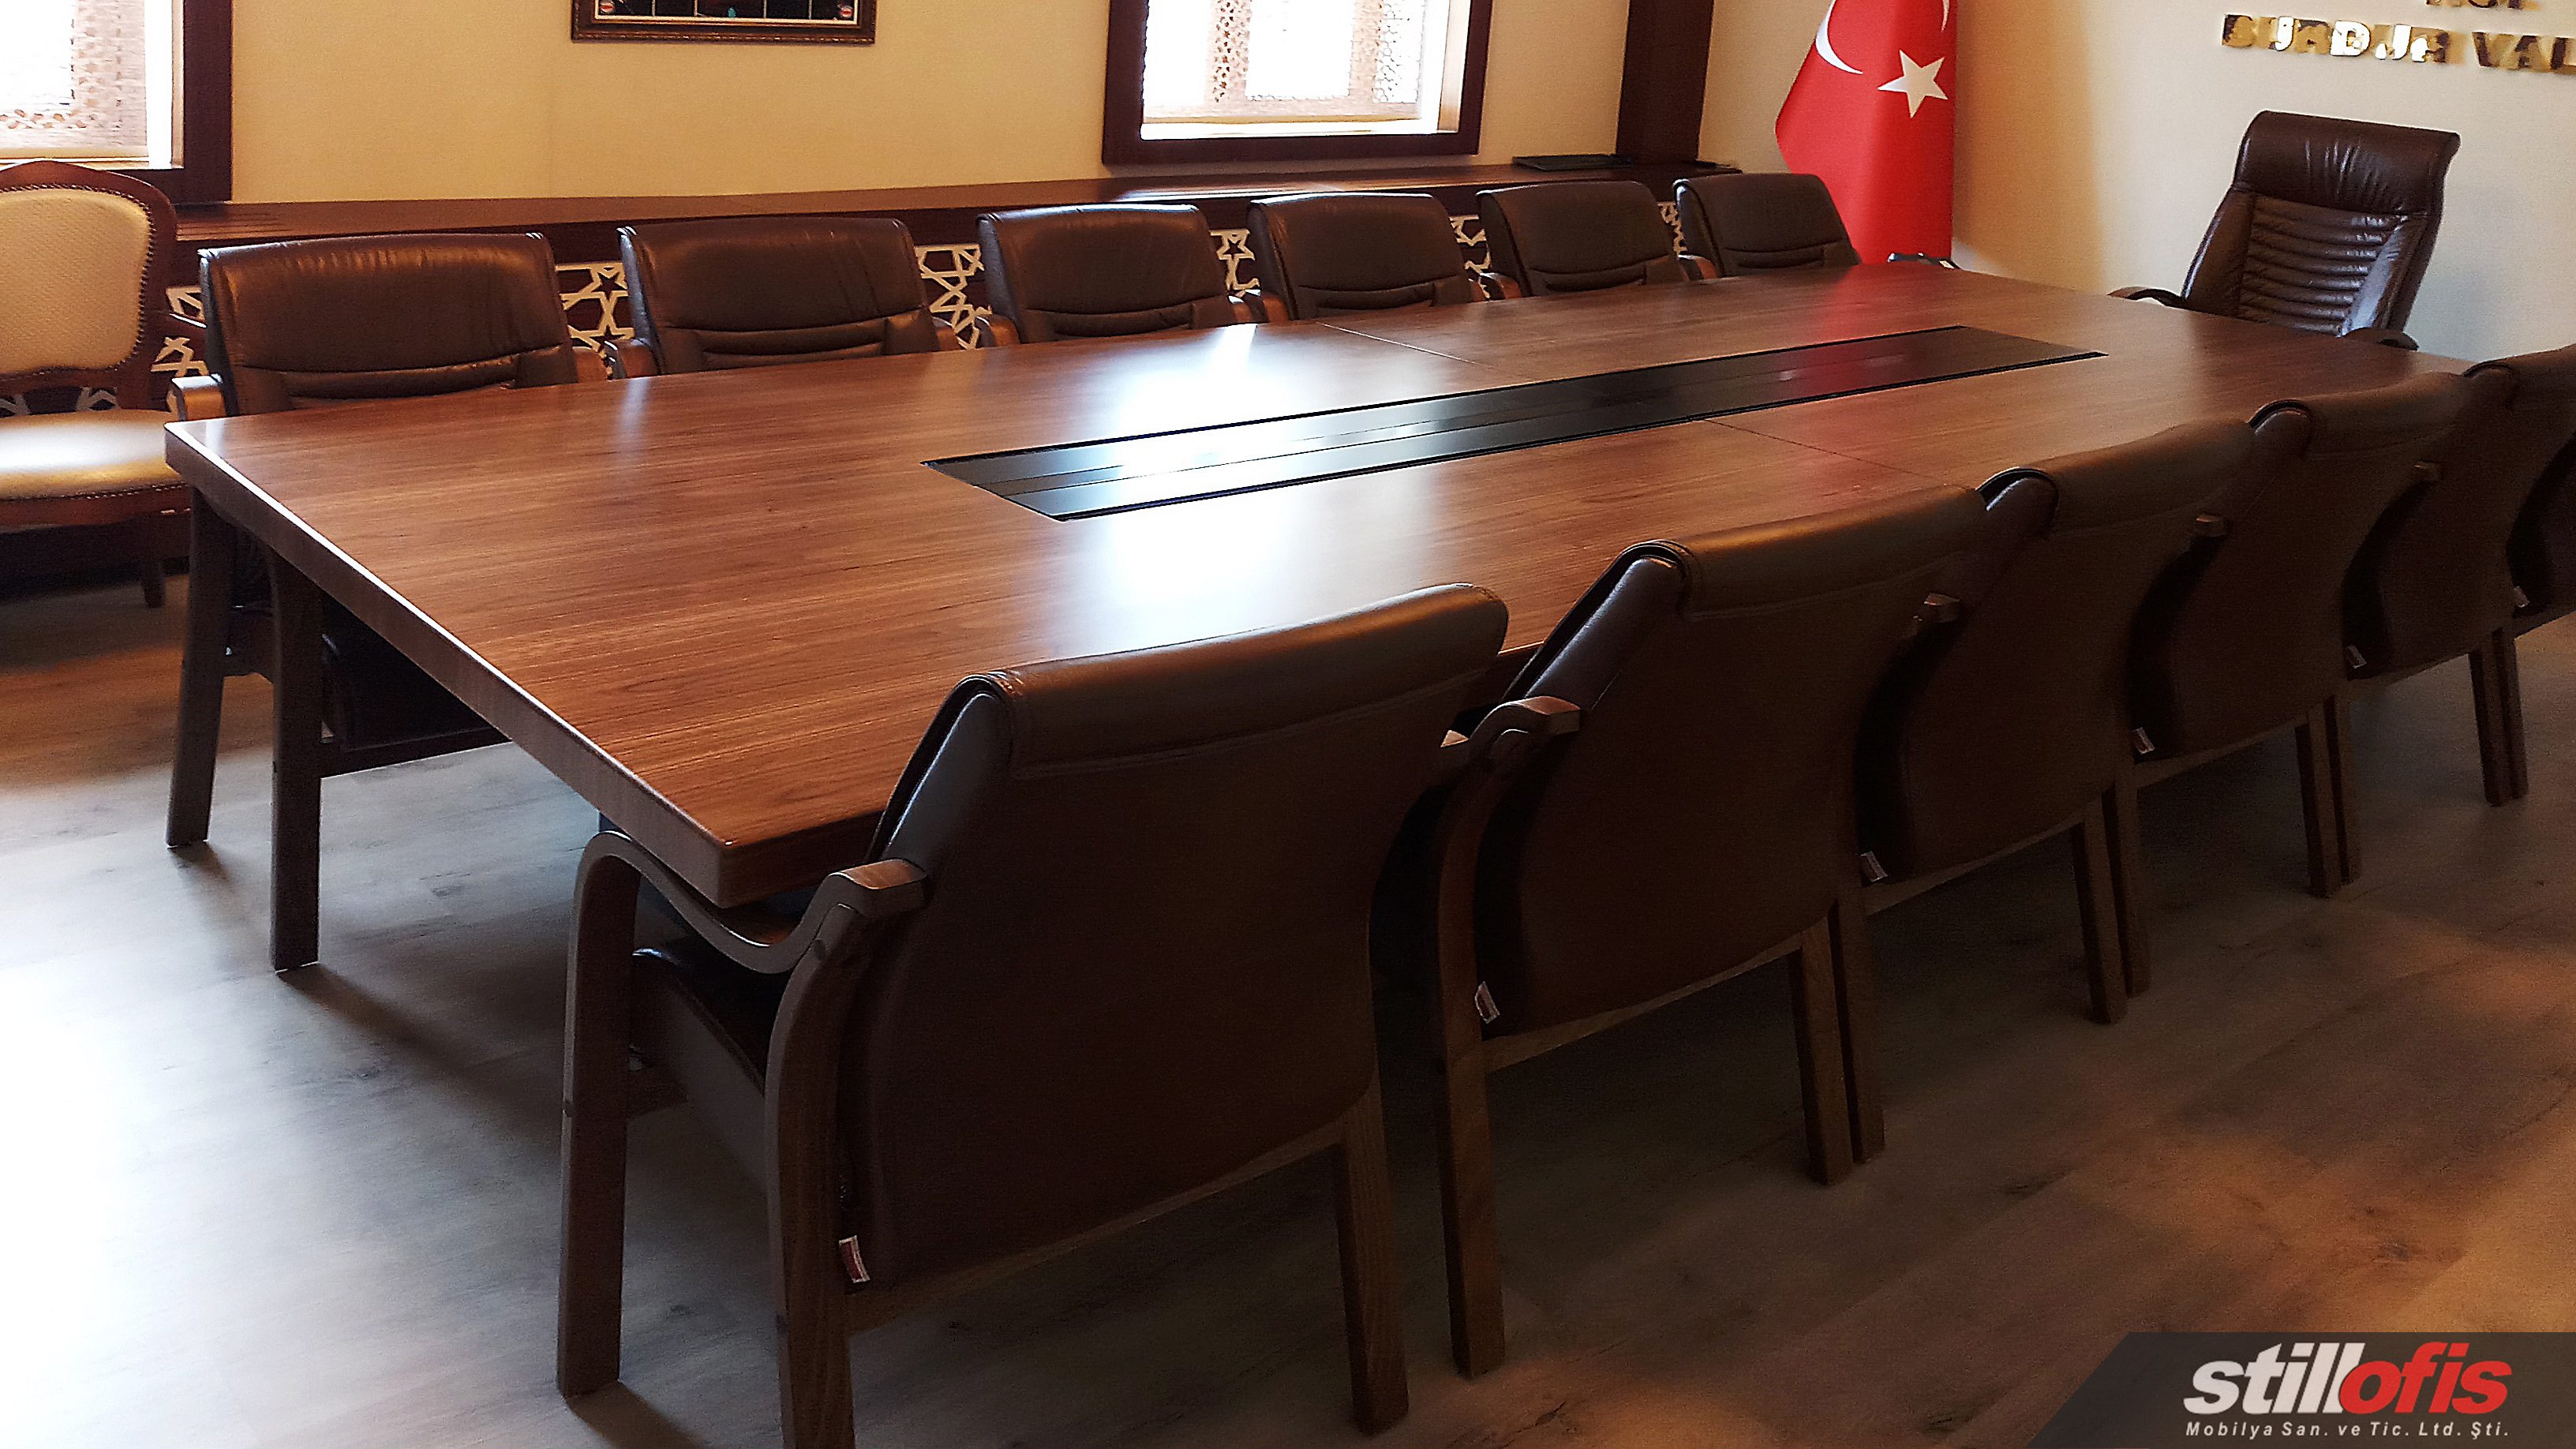 Republic of Turkey Burdur Governorship